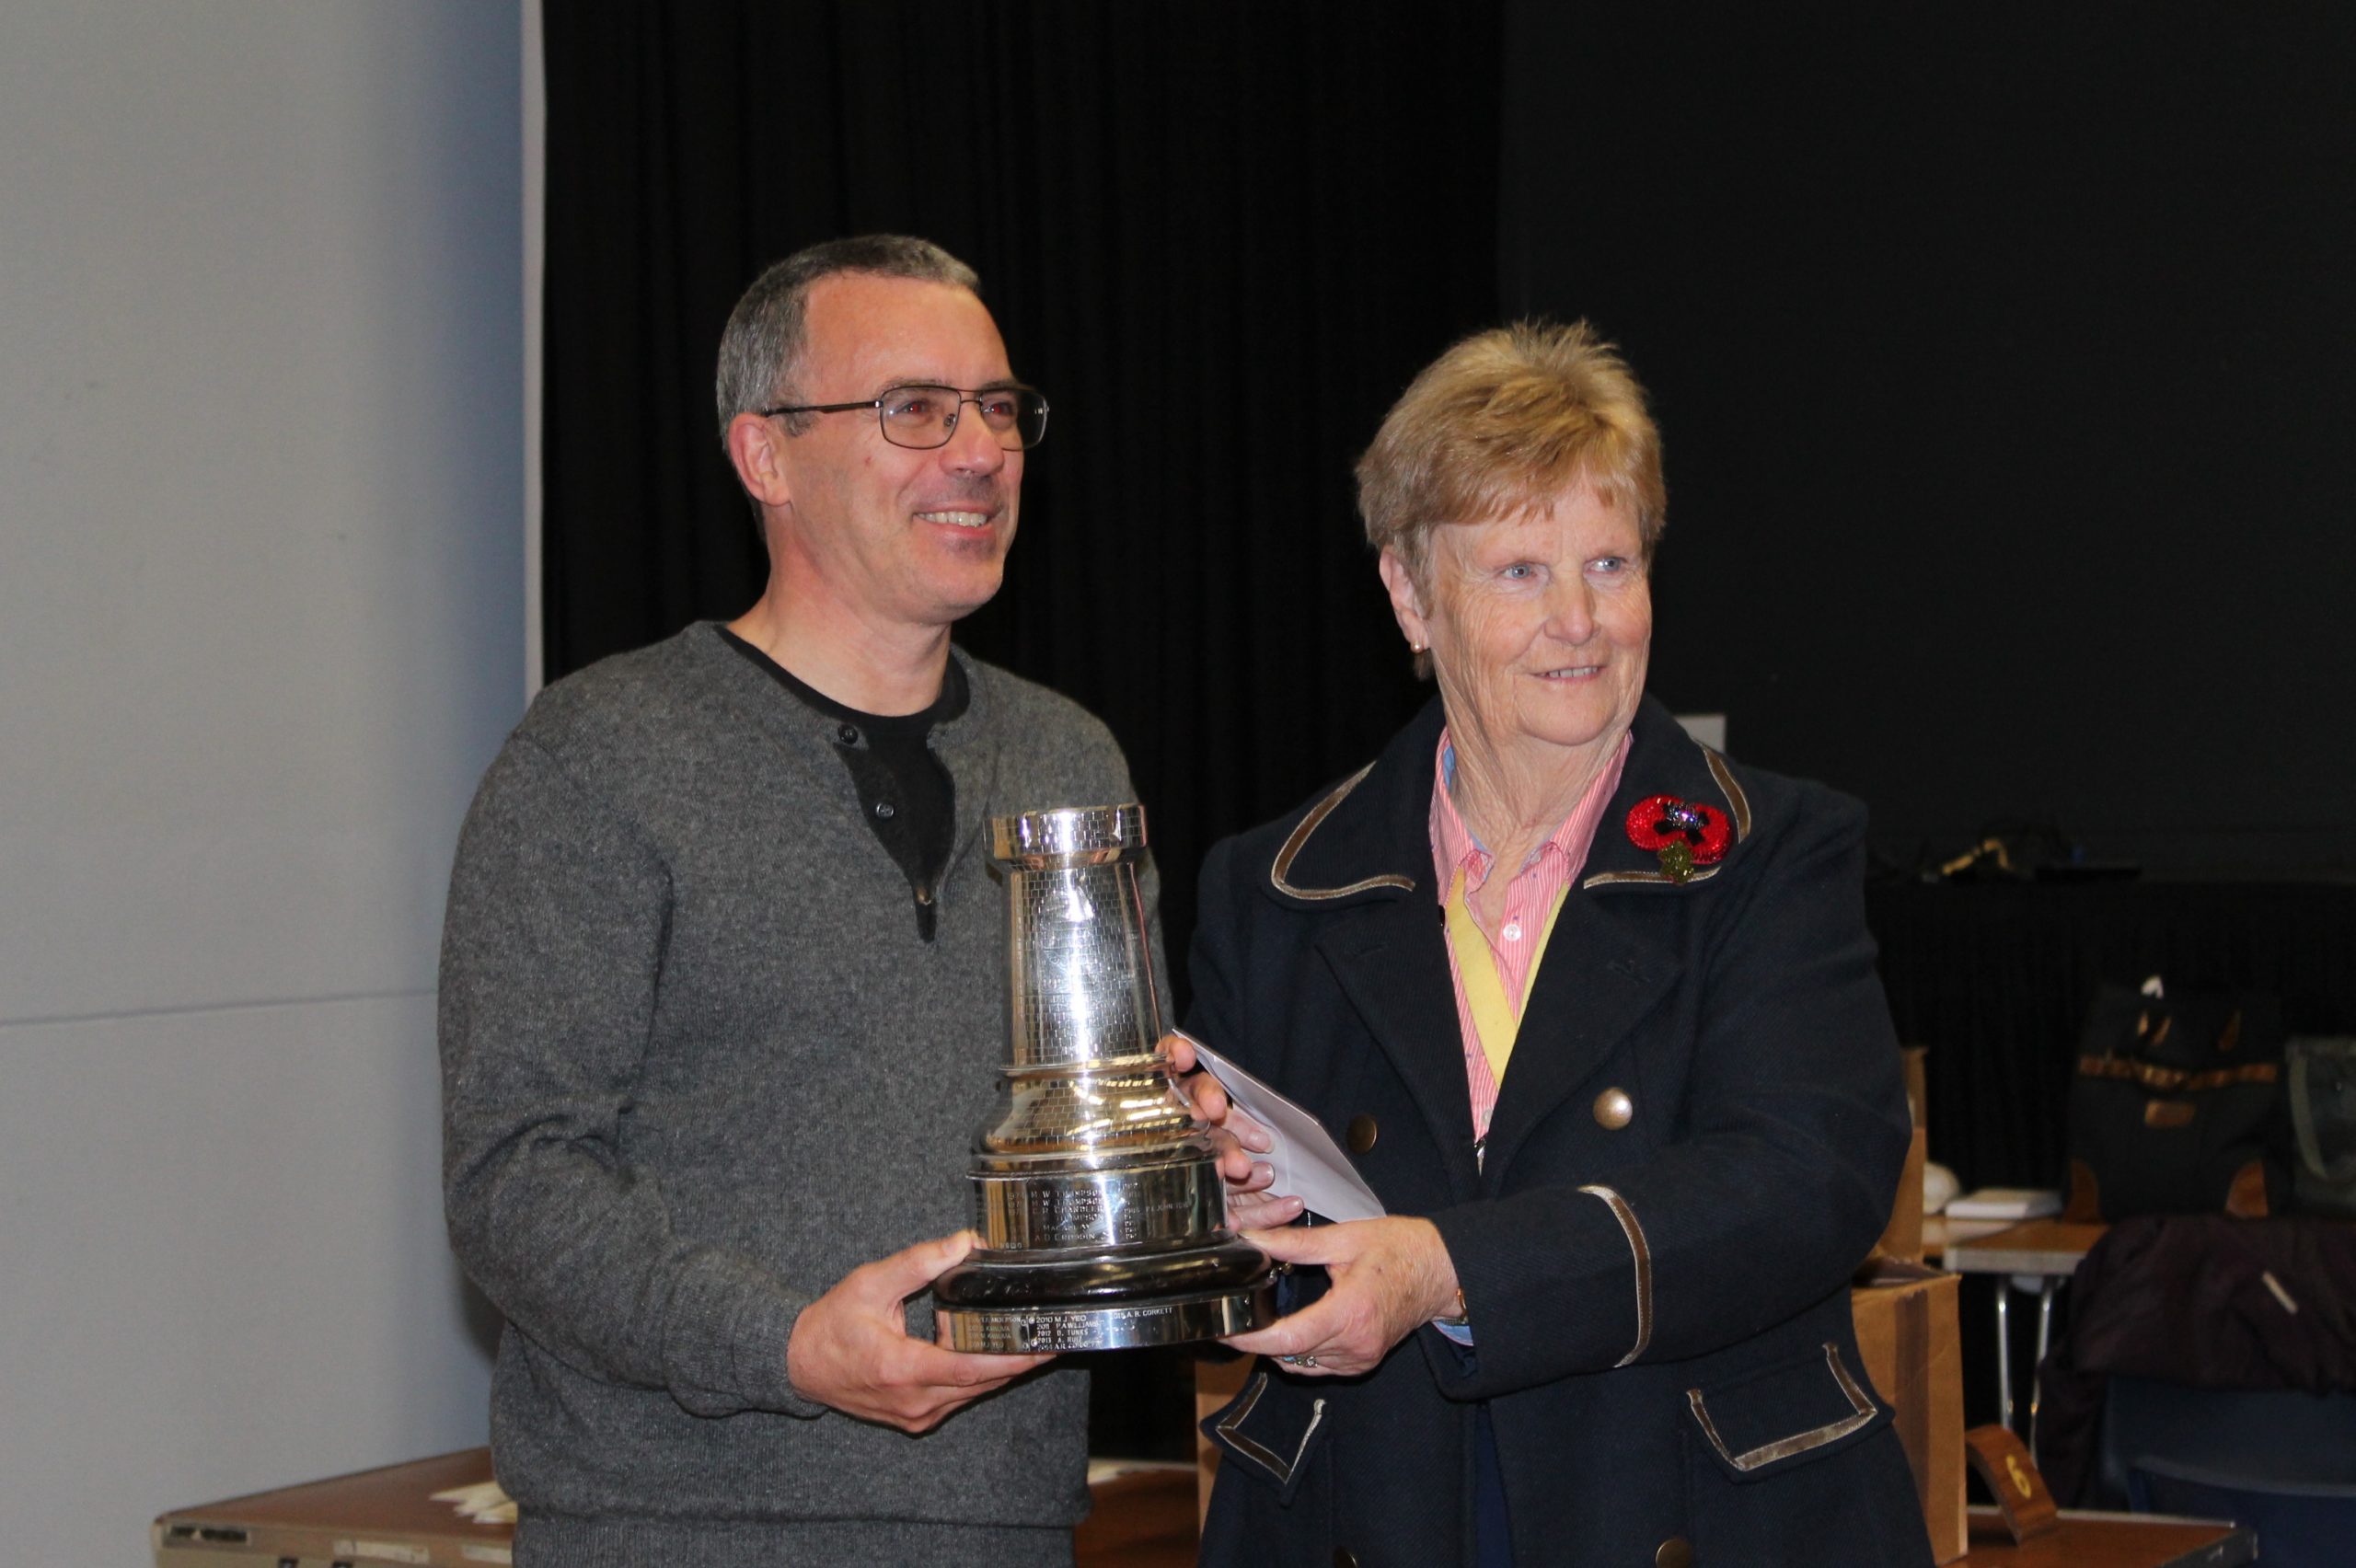 Tony Corkett winner of Silver Rook at 2016 Hampshire Chess Congress